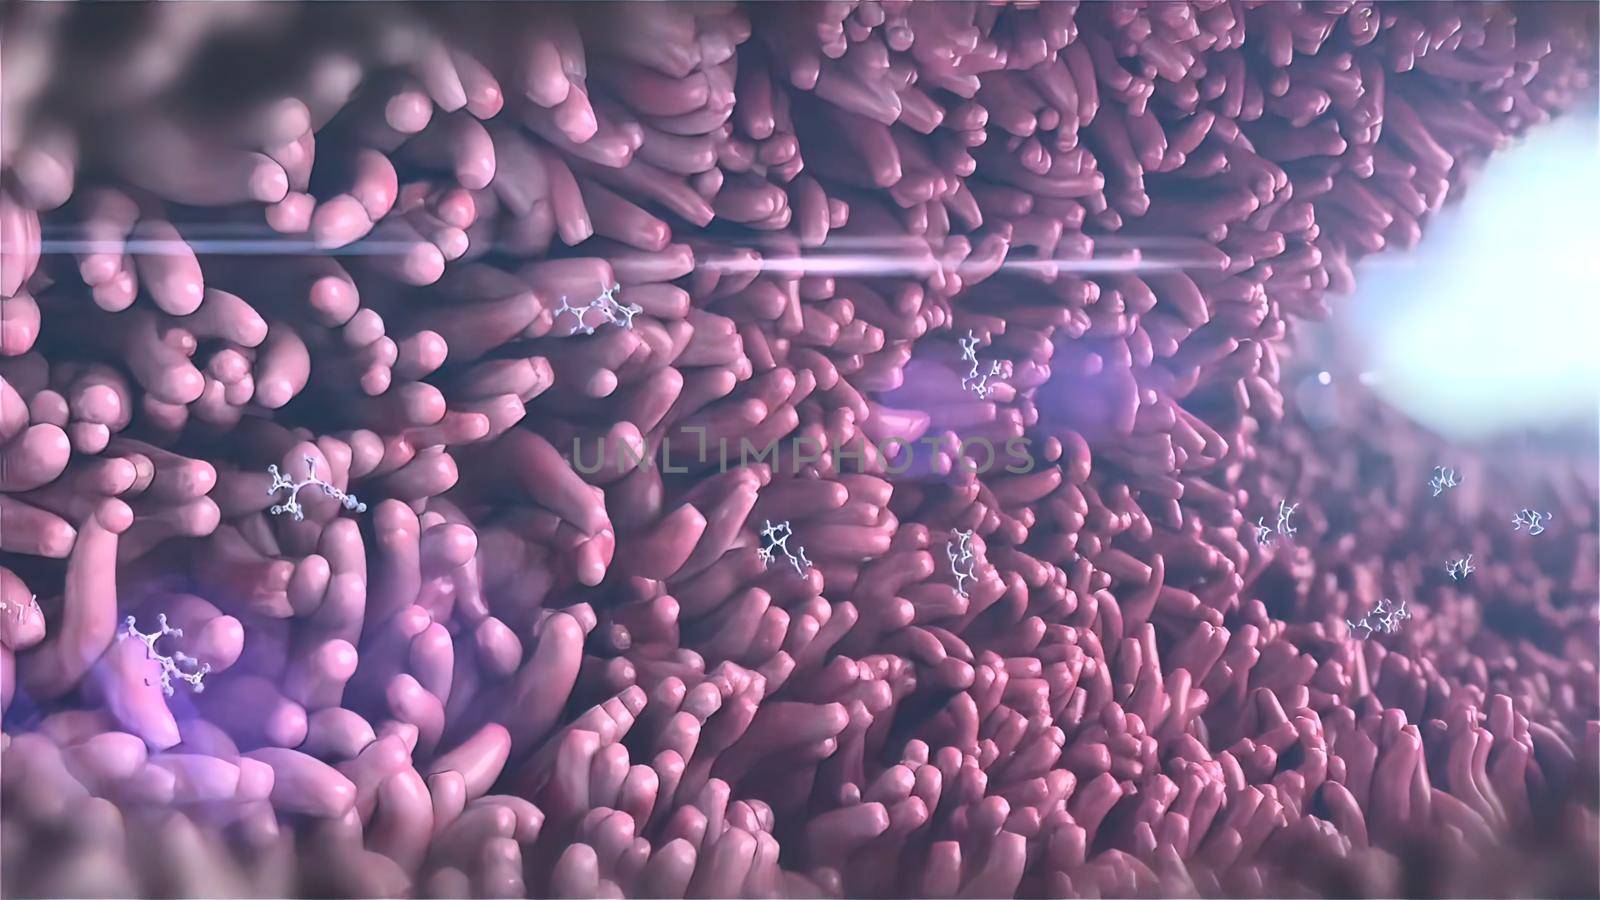 human skin and immune system 3D illustration